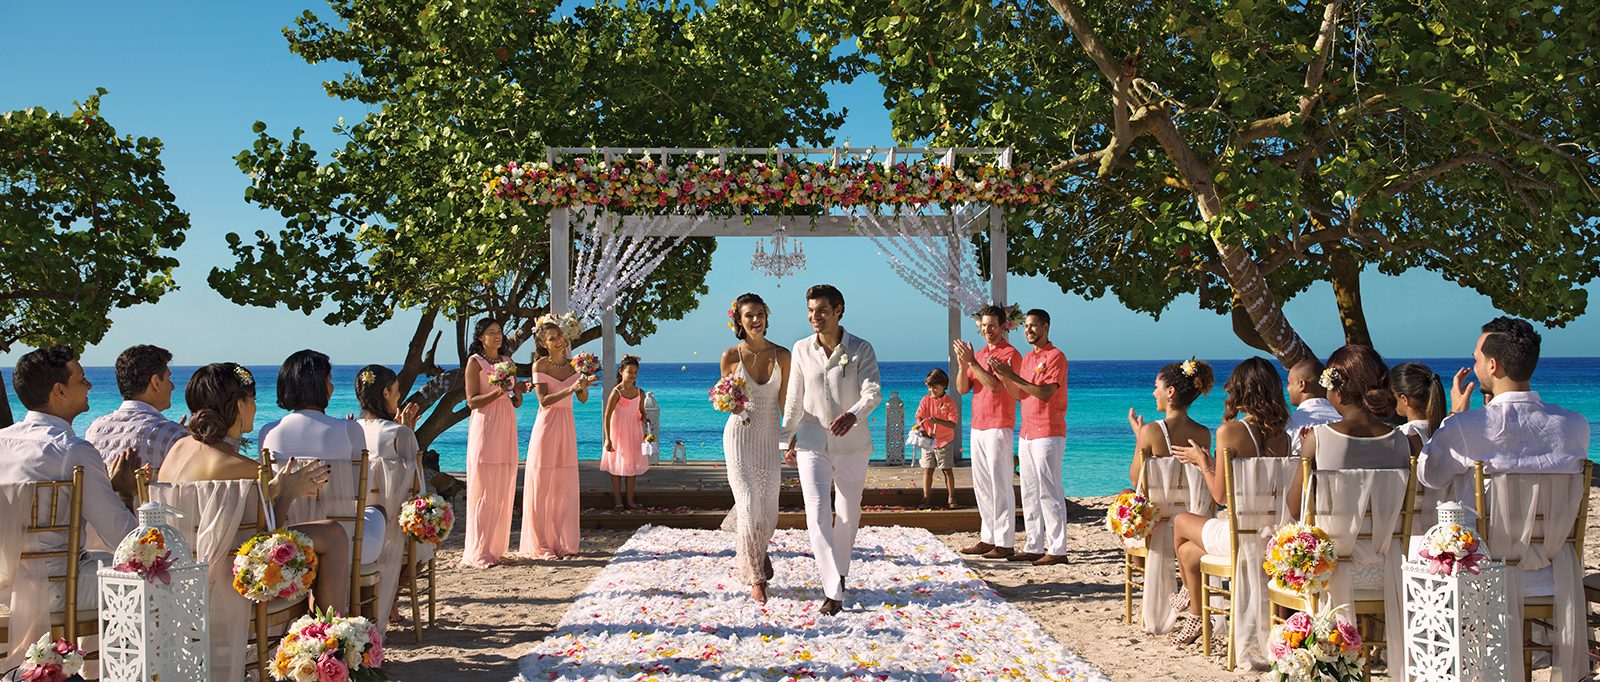 Dominican Republic Weddings And Weddings Abroad 2022 23 Beach Weddings